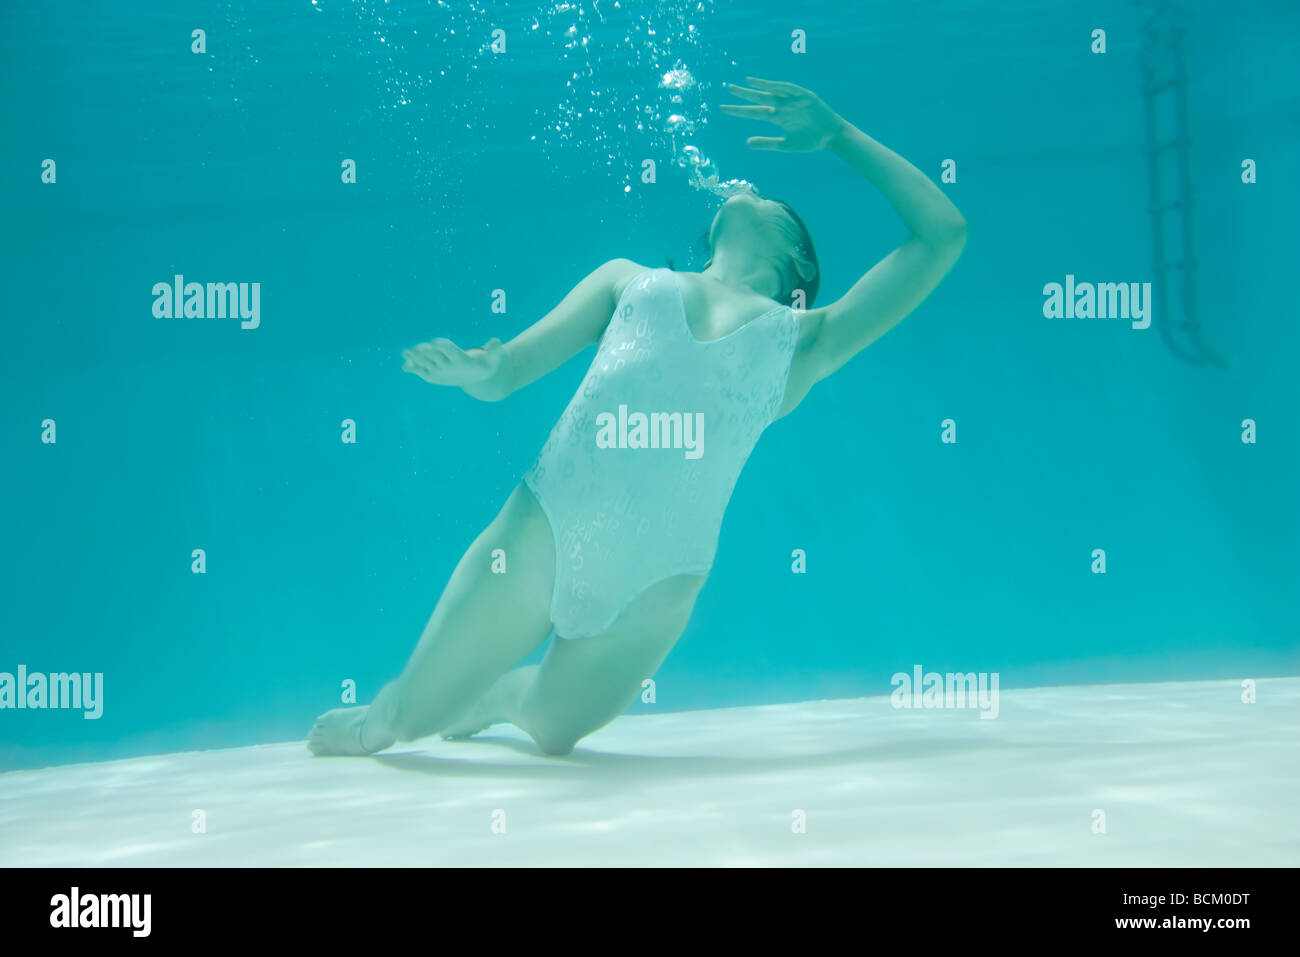 Teen Girl Underwater In Swimming Pool Stock Photo Royalty Free Image